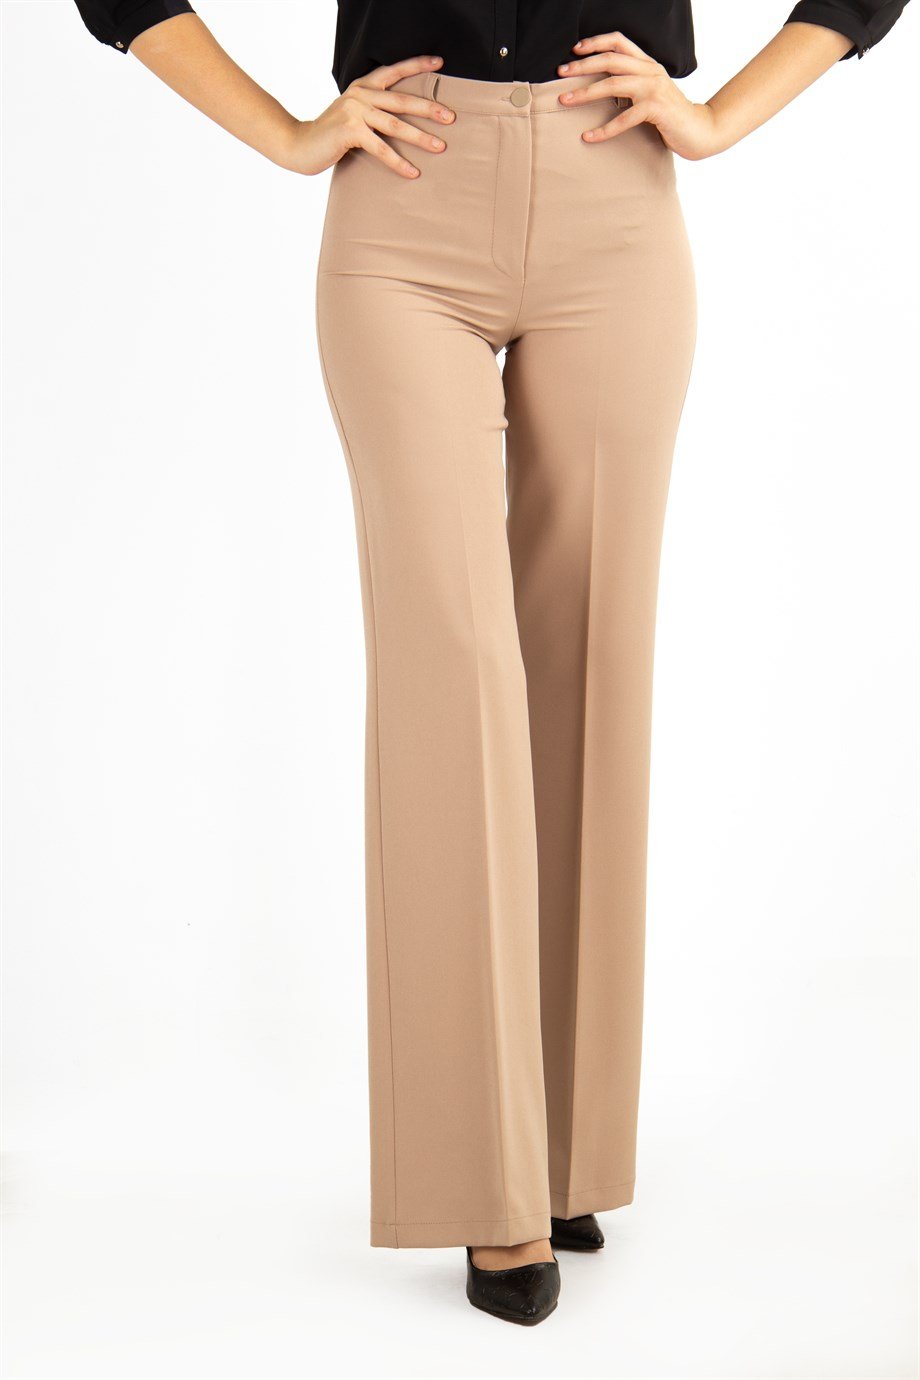 Classic Pants Office Trouser - Beige - Wholesale Womens Clothing Vendors  For Boutiques